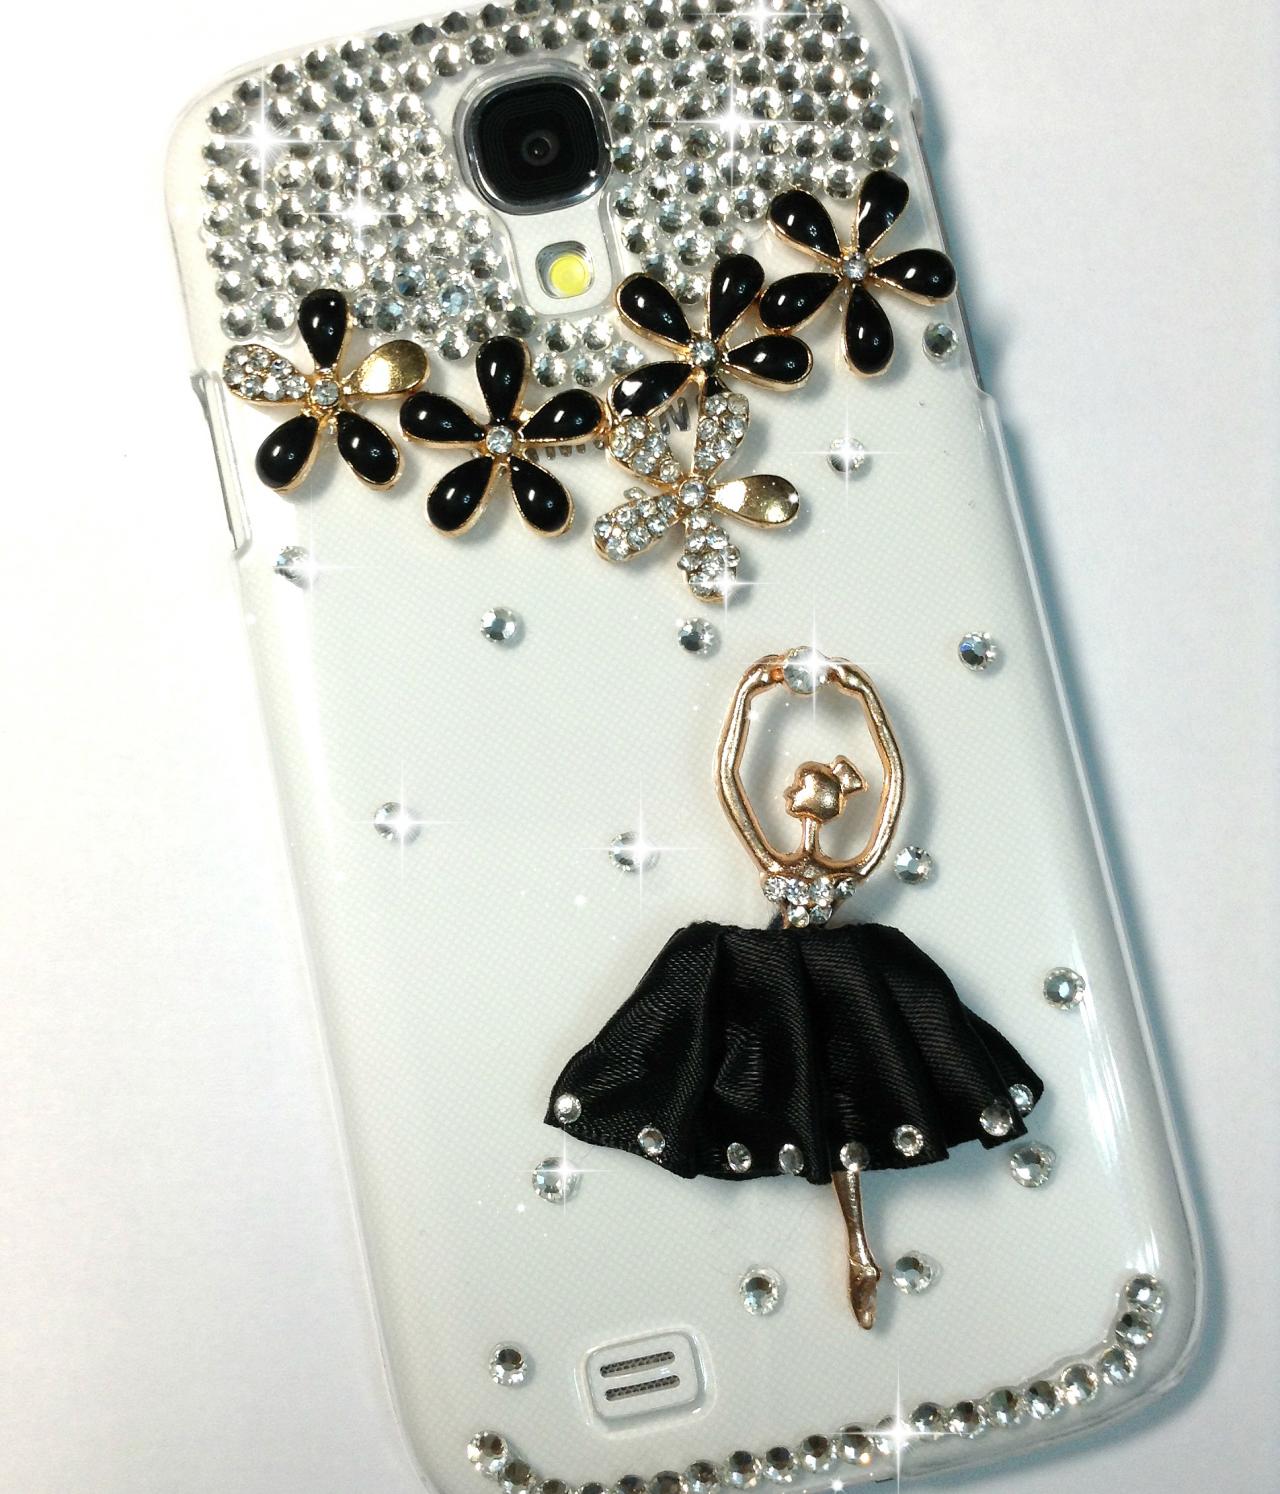 3d Handmade Black Ballet Dancing Girl Design Case Cover For Samsung Galaxy S 4 S4 Iv Lte I9500 I9505